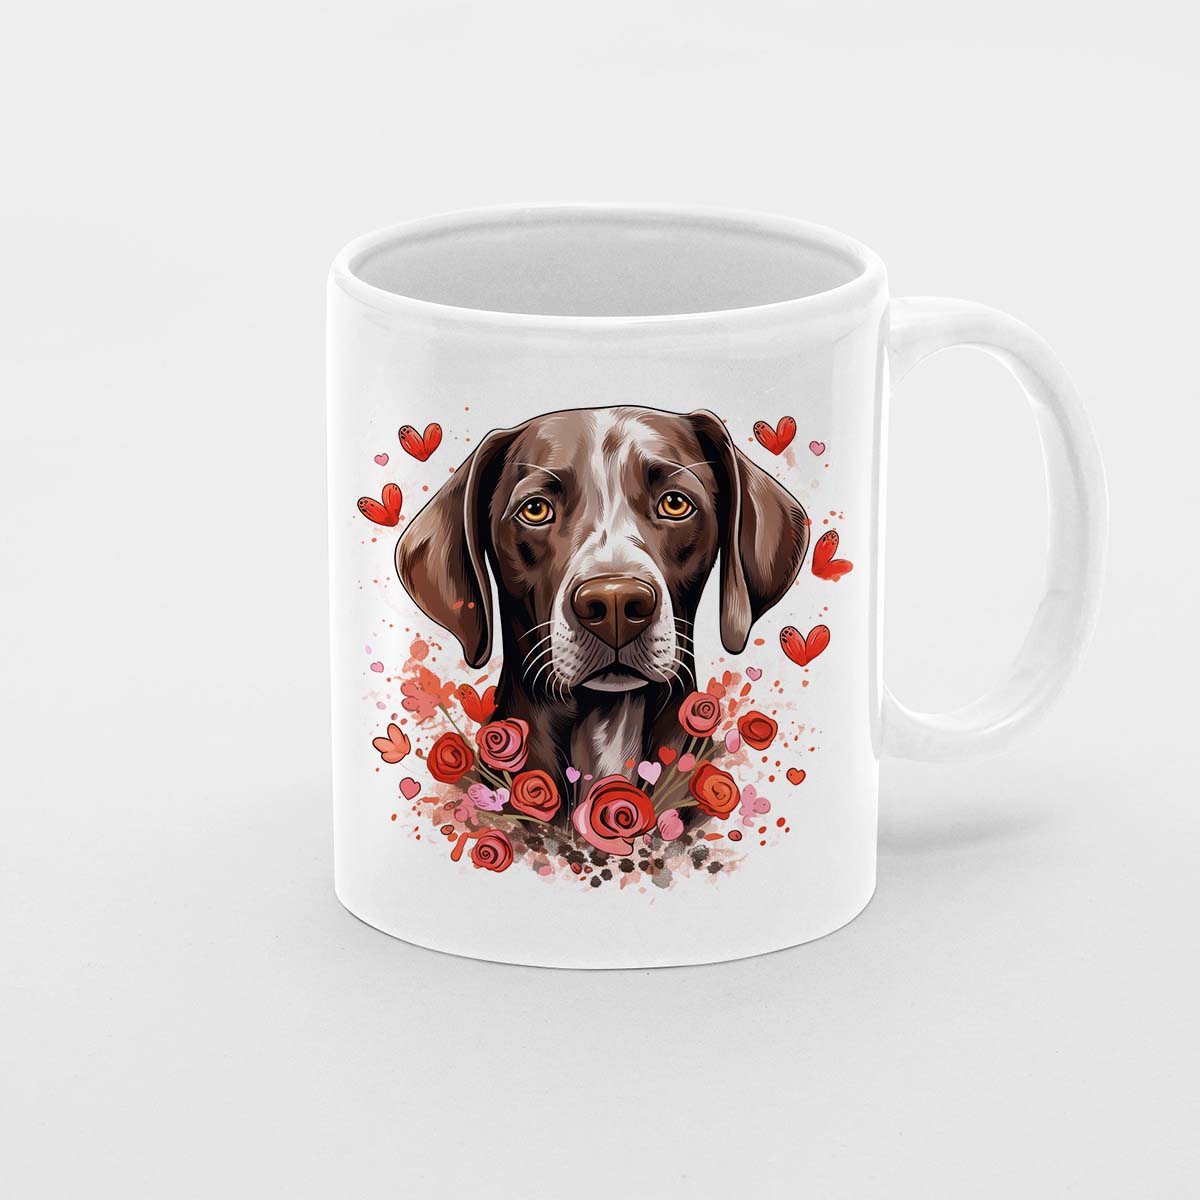 Custom Valentine's Day Dog Mug, Personalized Valentine's Day Gift for Dog Lover, Cute German Shorthaired Love Ceramic Mug, Dog Coffee Mugs, Personalized Pet Mugs, Cute Valentine Puppy Heart Ceramic Mug, Valentines Gift